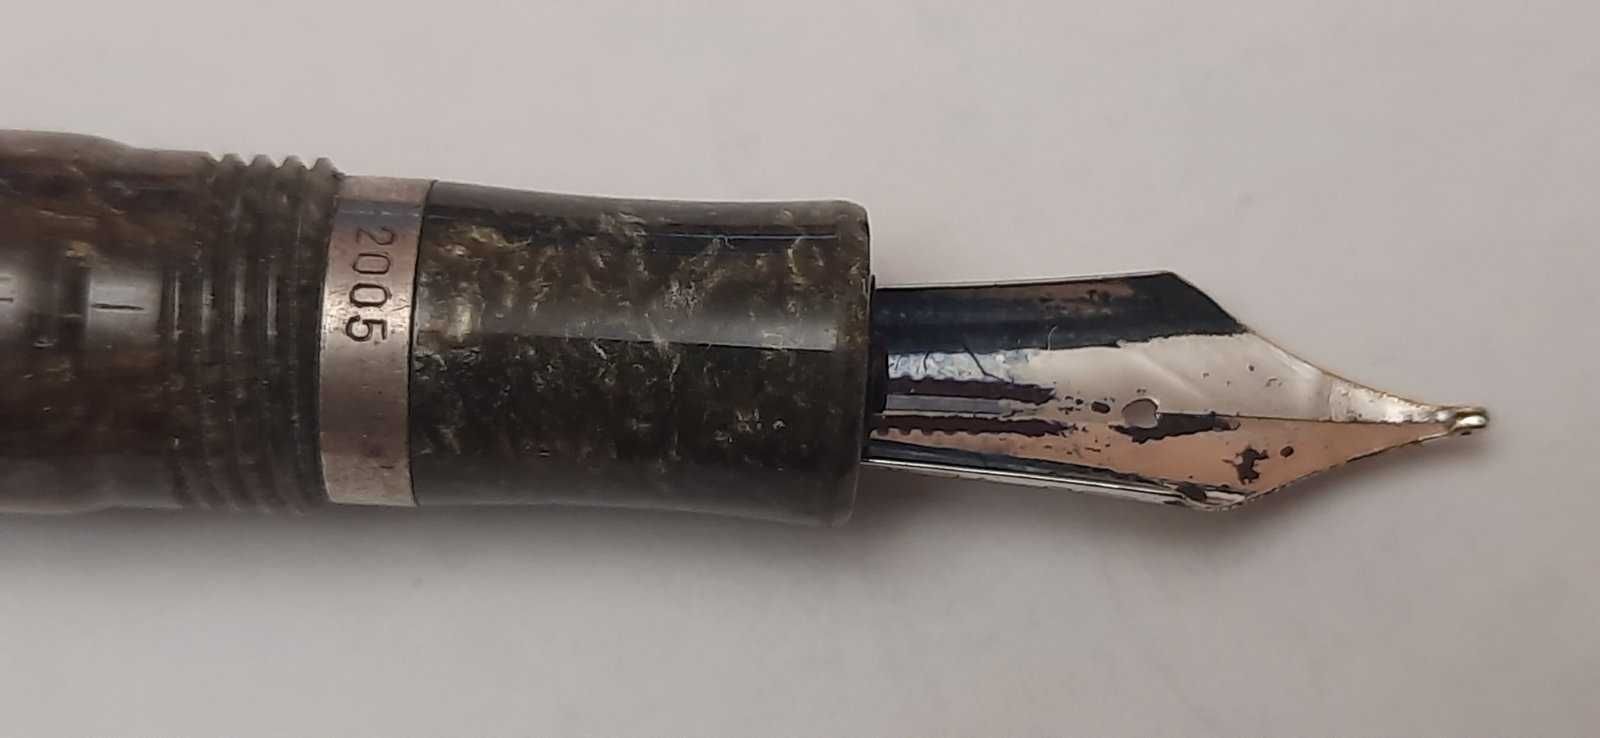 элитная ручка Montegrappa Зодиак коллекшн Змея стерлинговое серебро